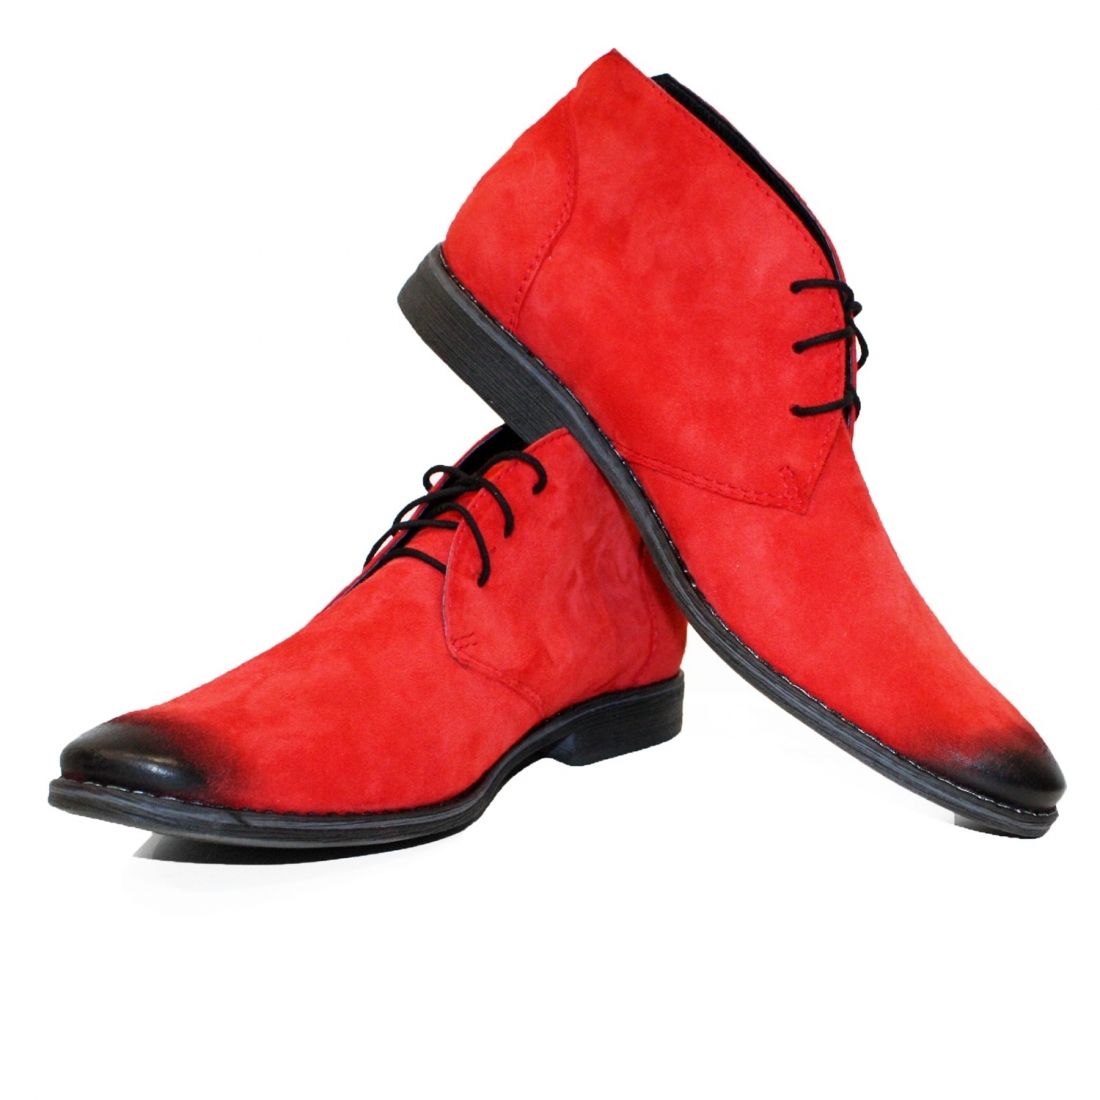 Modello Huzzello - Buty Chukka - Handmade Colorful Italian Leather Shoes